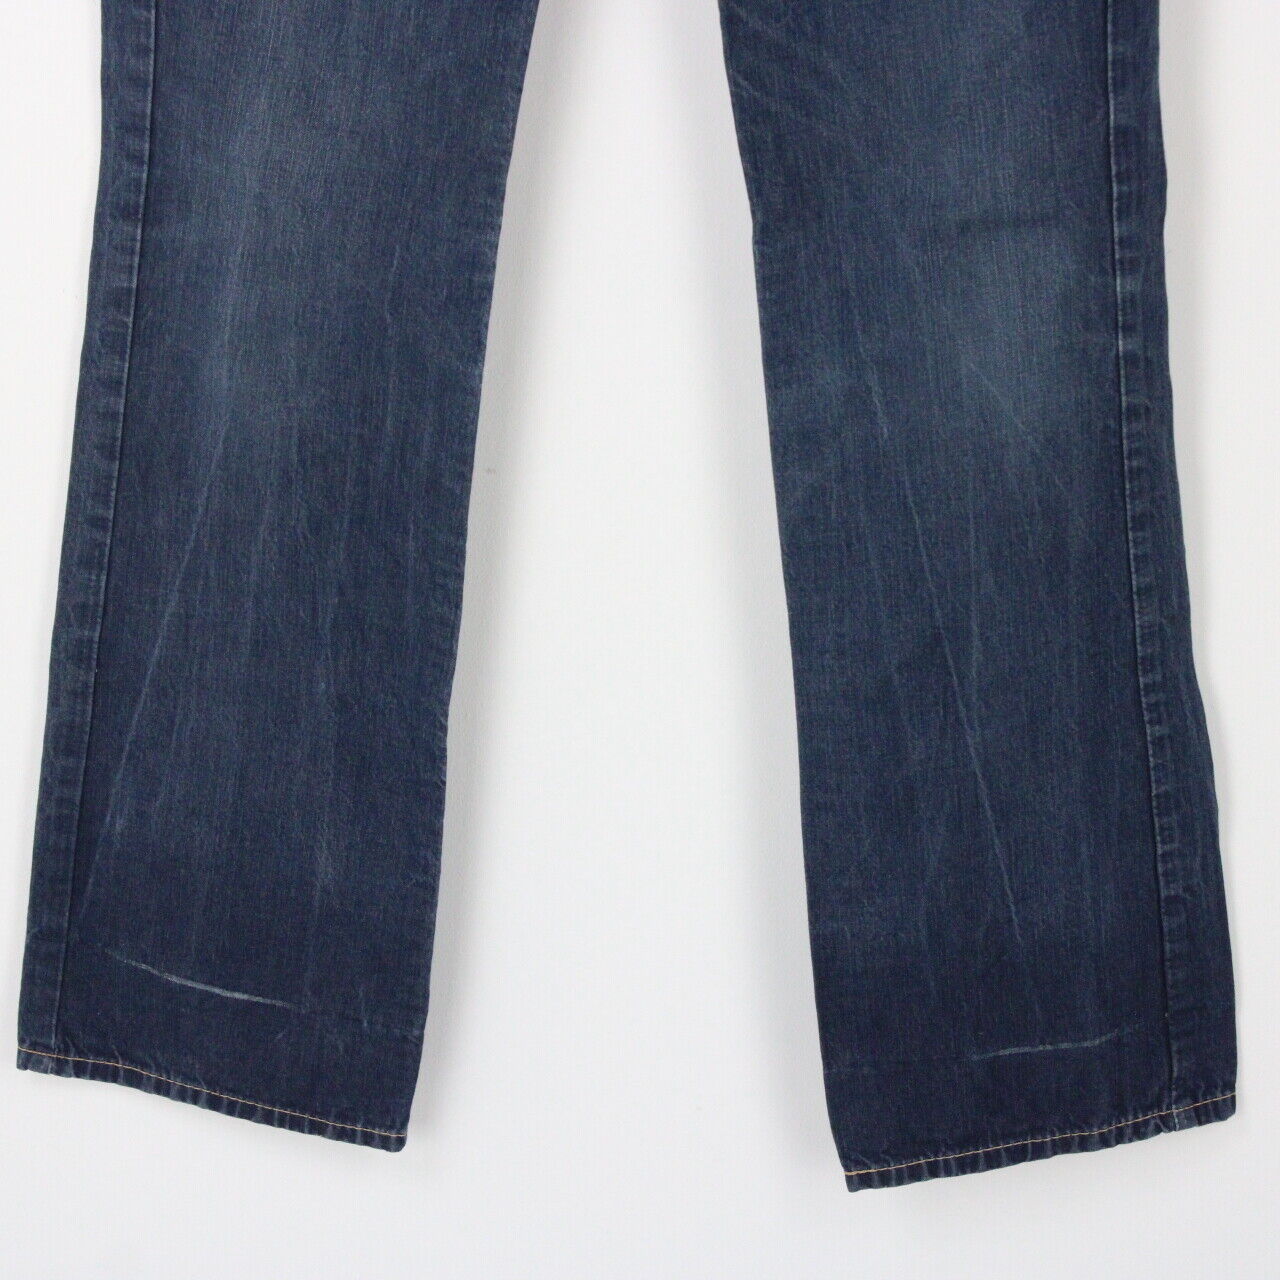 Womens LEVIS 921 Jeans Mid Blue | W30 L34